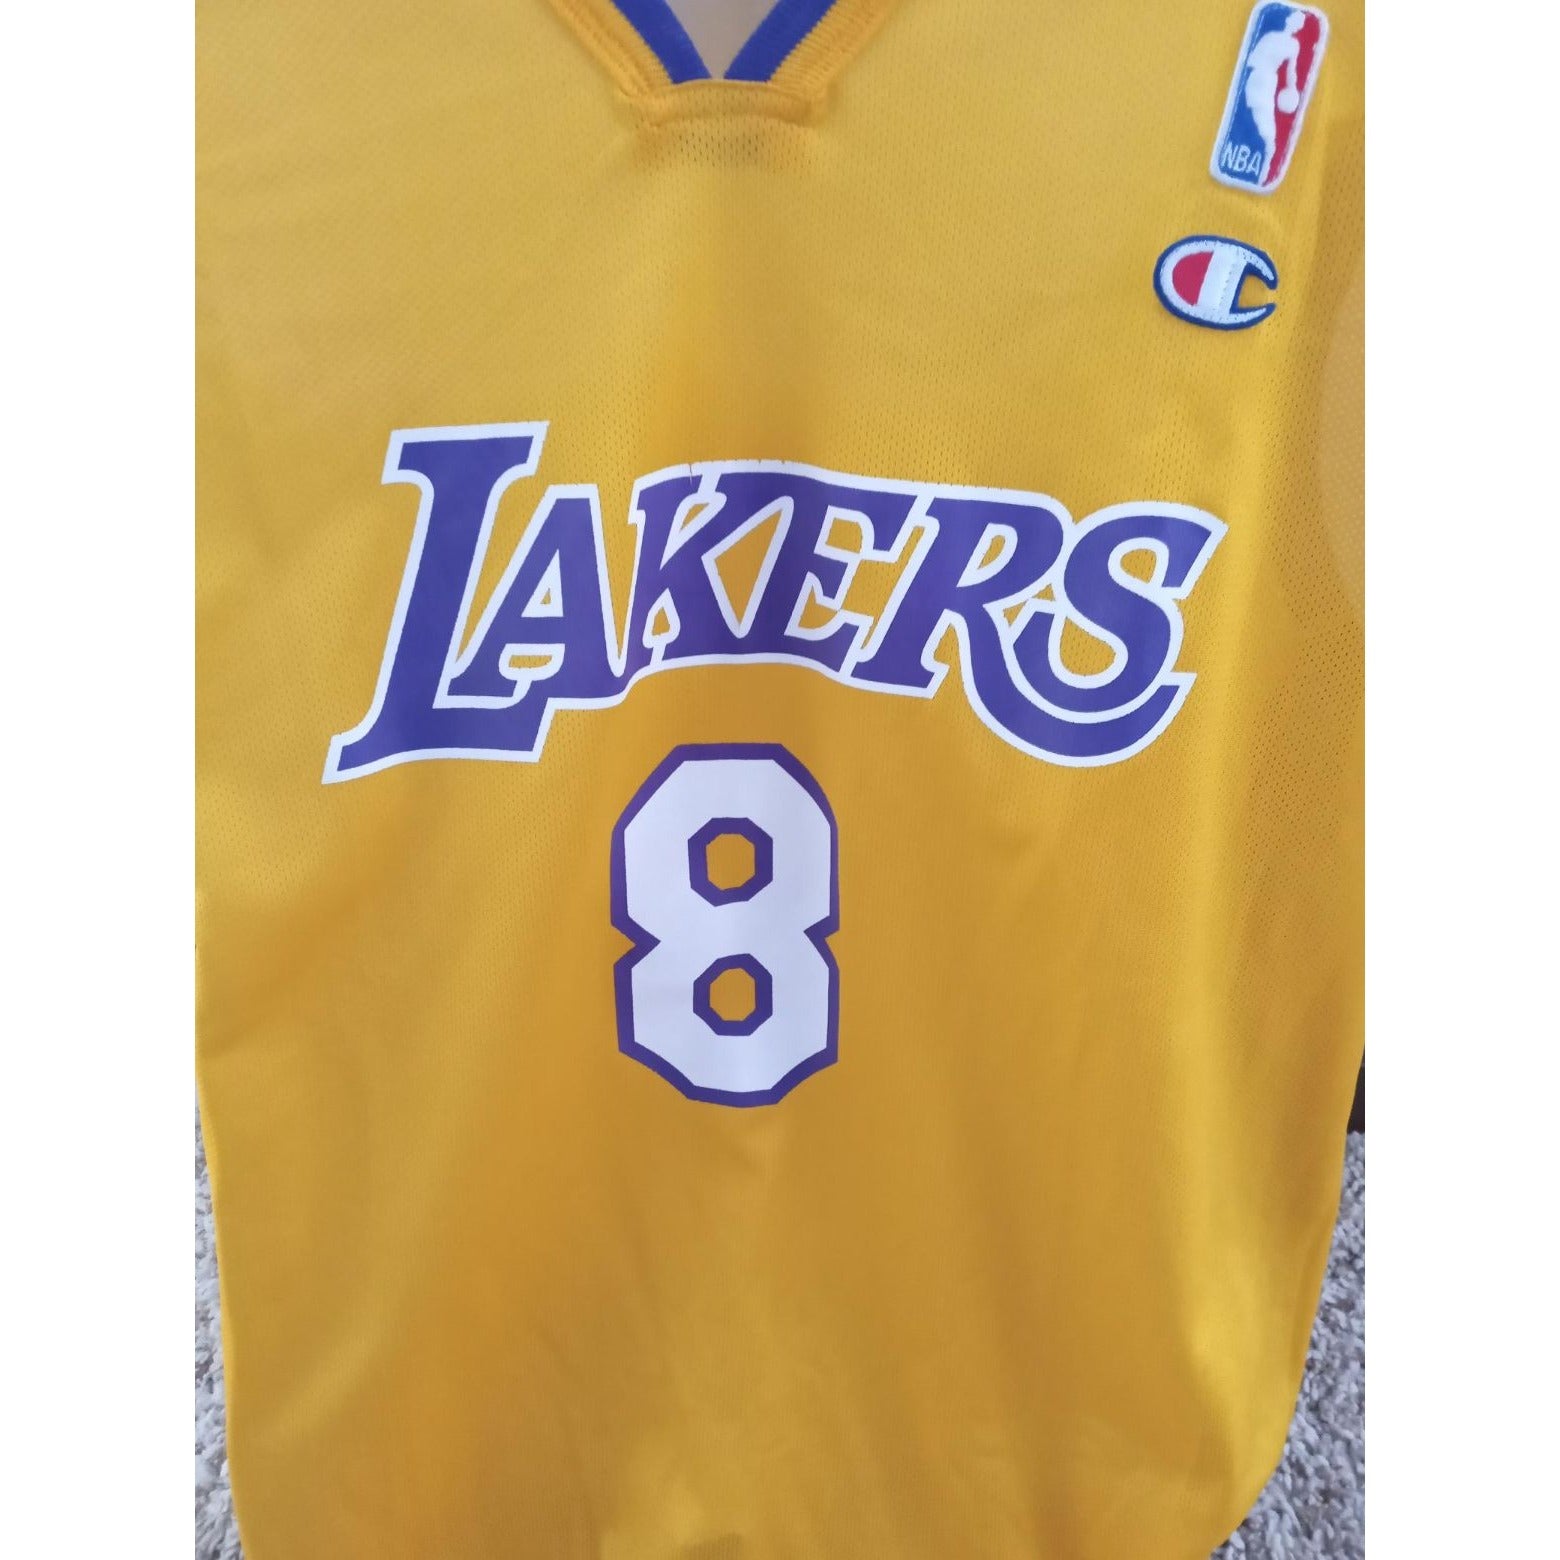 Los Angeles Lakers #8 Kobe Bryant Retro NBA Basketball Jersey